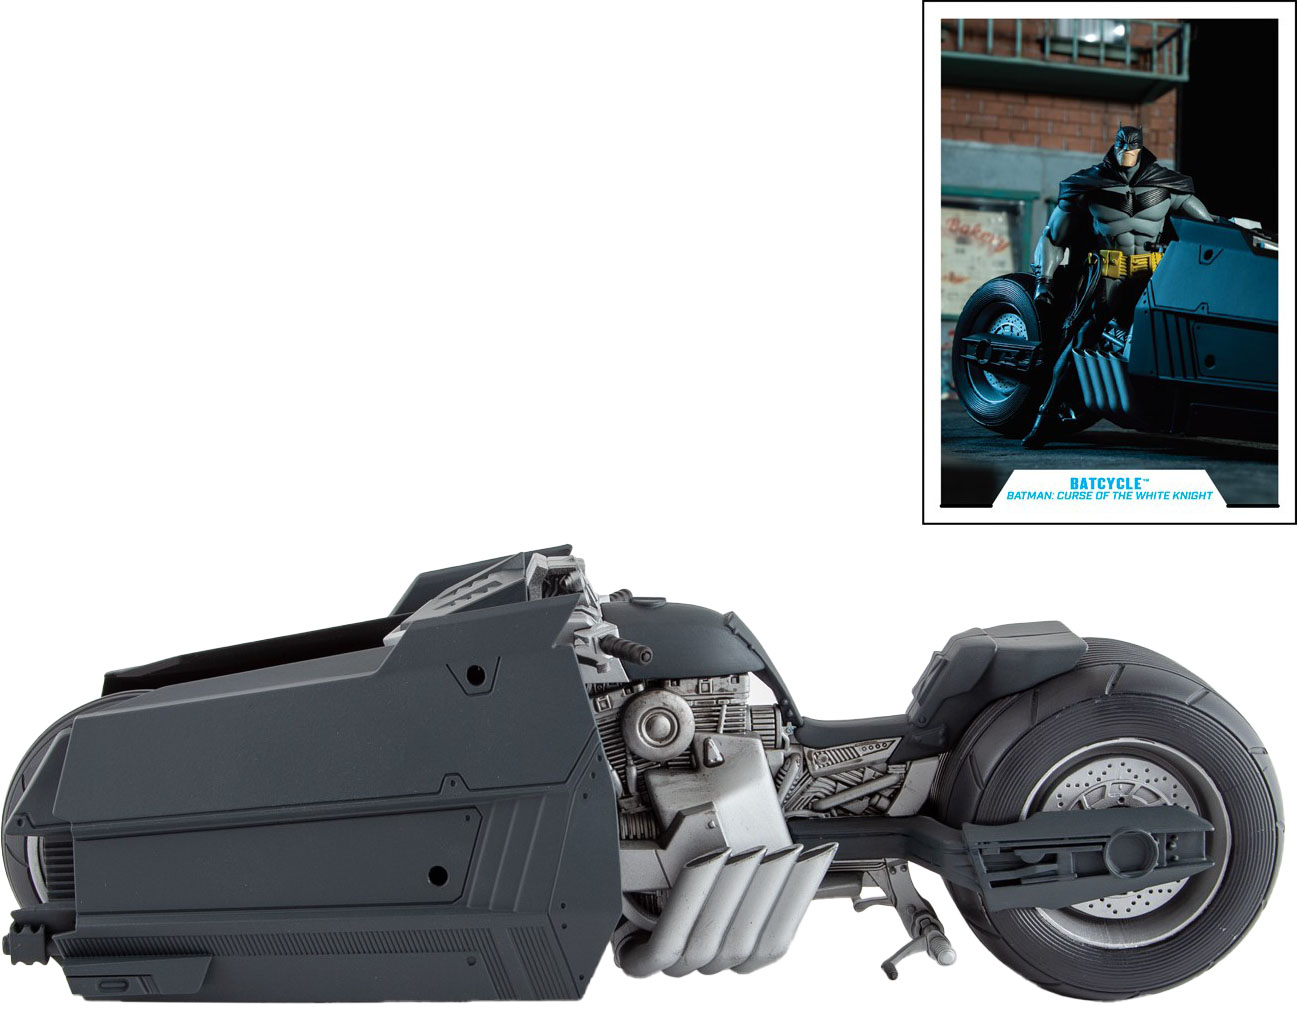 McFarlane Toys DC Multiverse Vehicle White Knight Batcycle 15703 - Best Buy